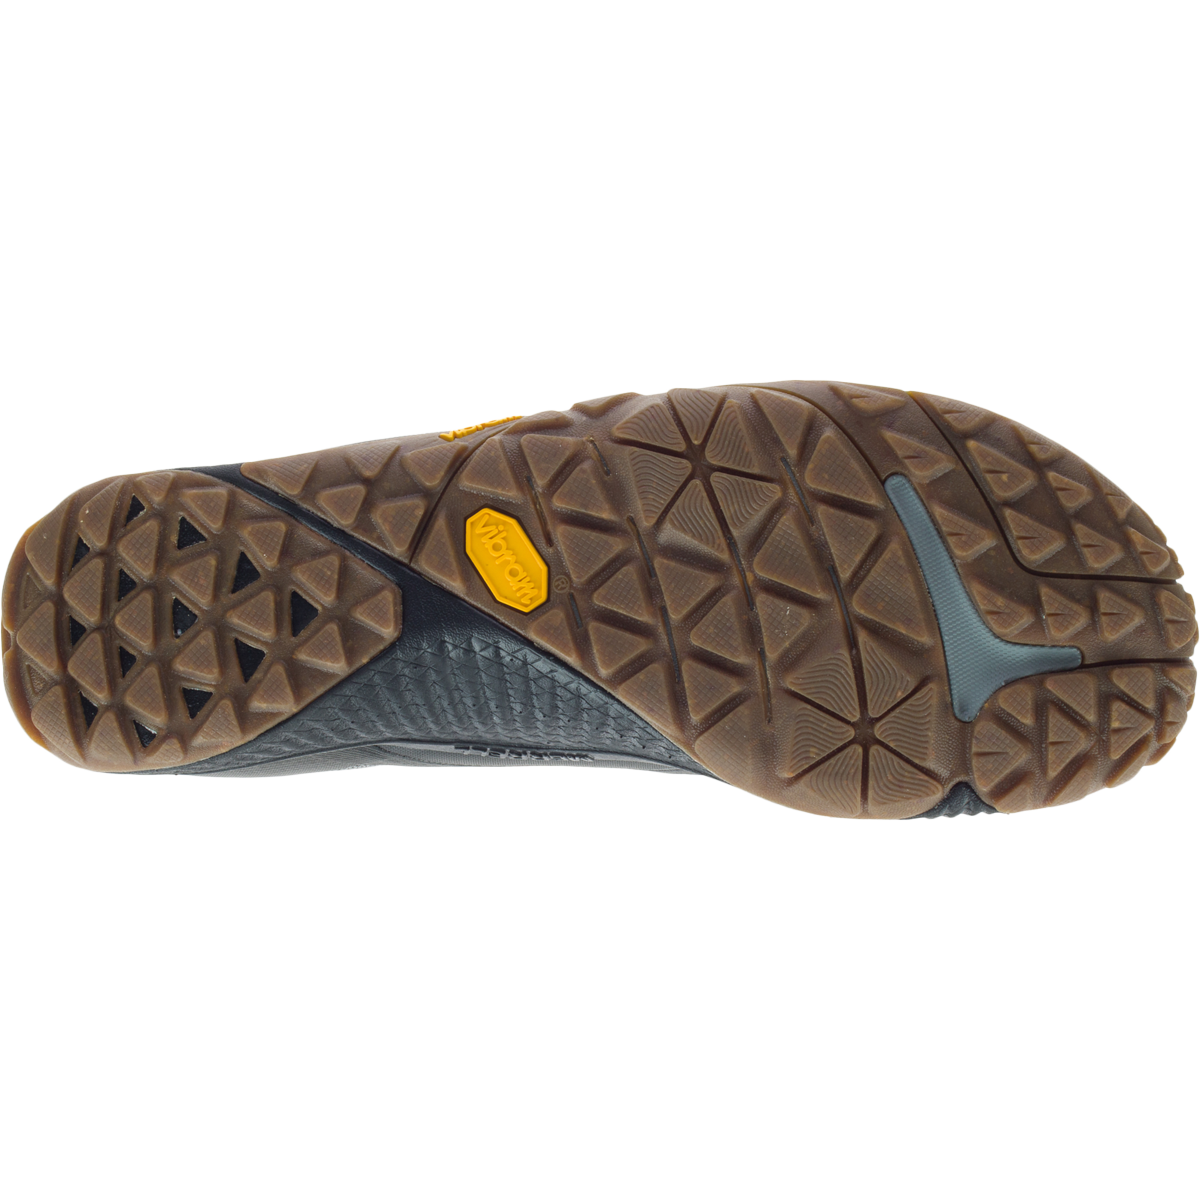 MERRELL Men's Vapor Glove 6 Trail Runnning Shoes - Free Shipping